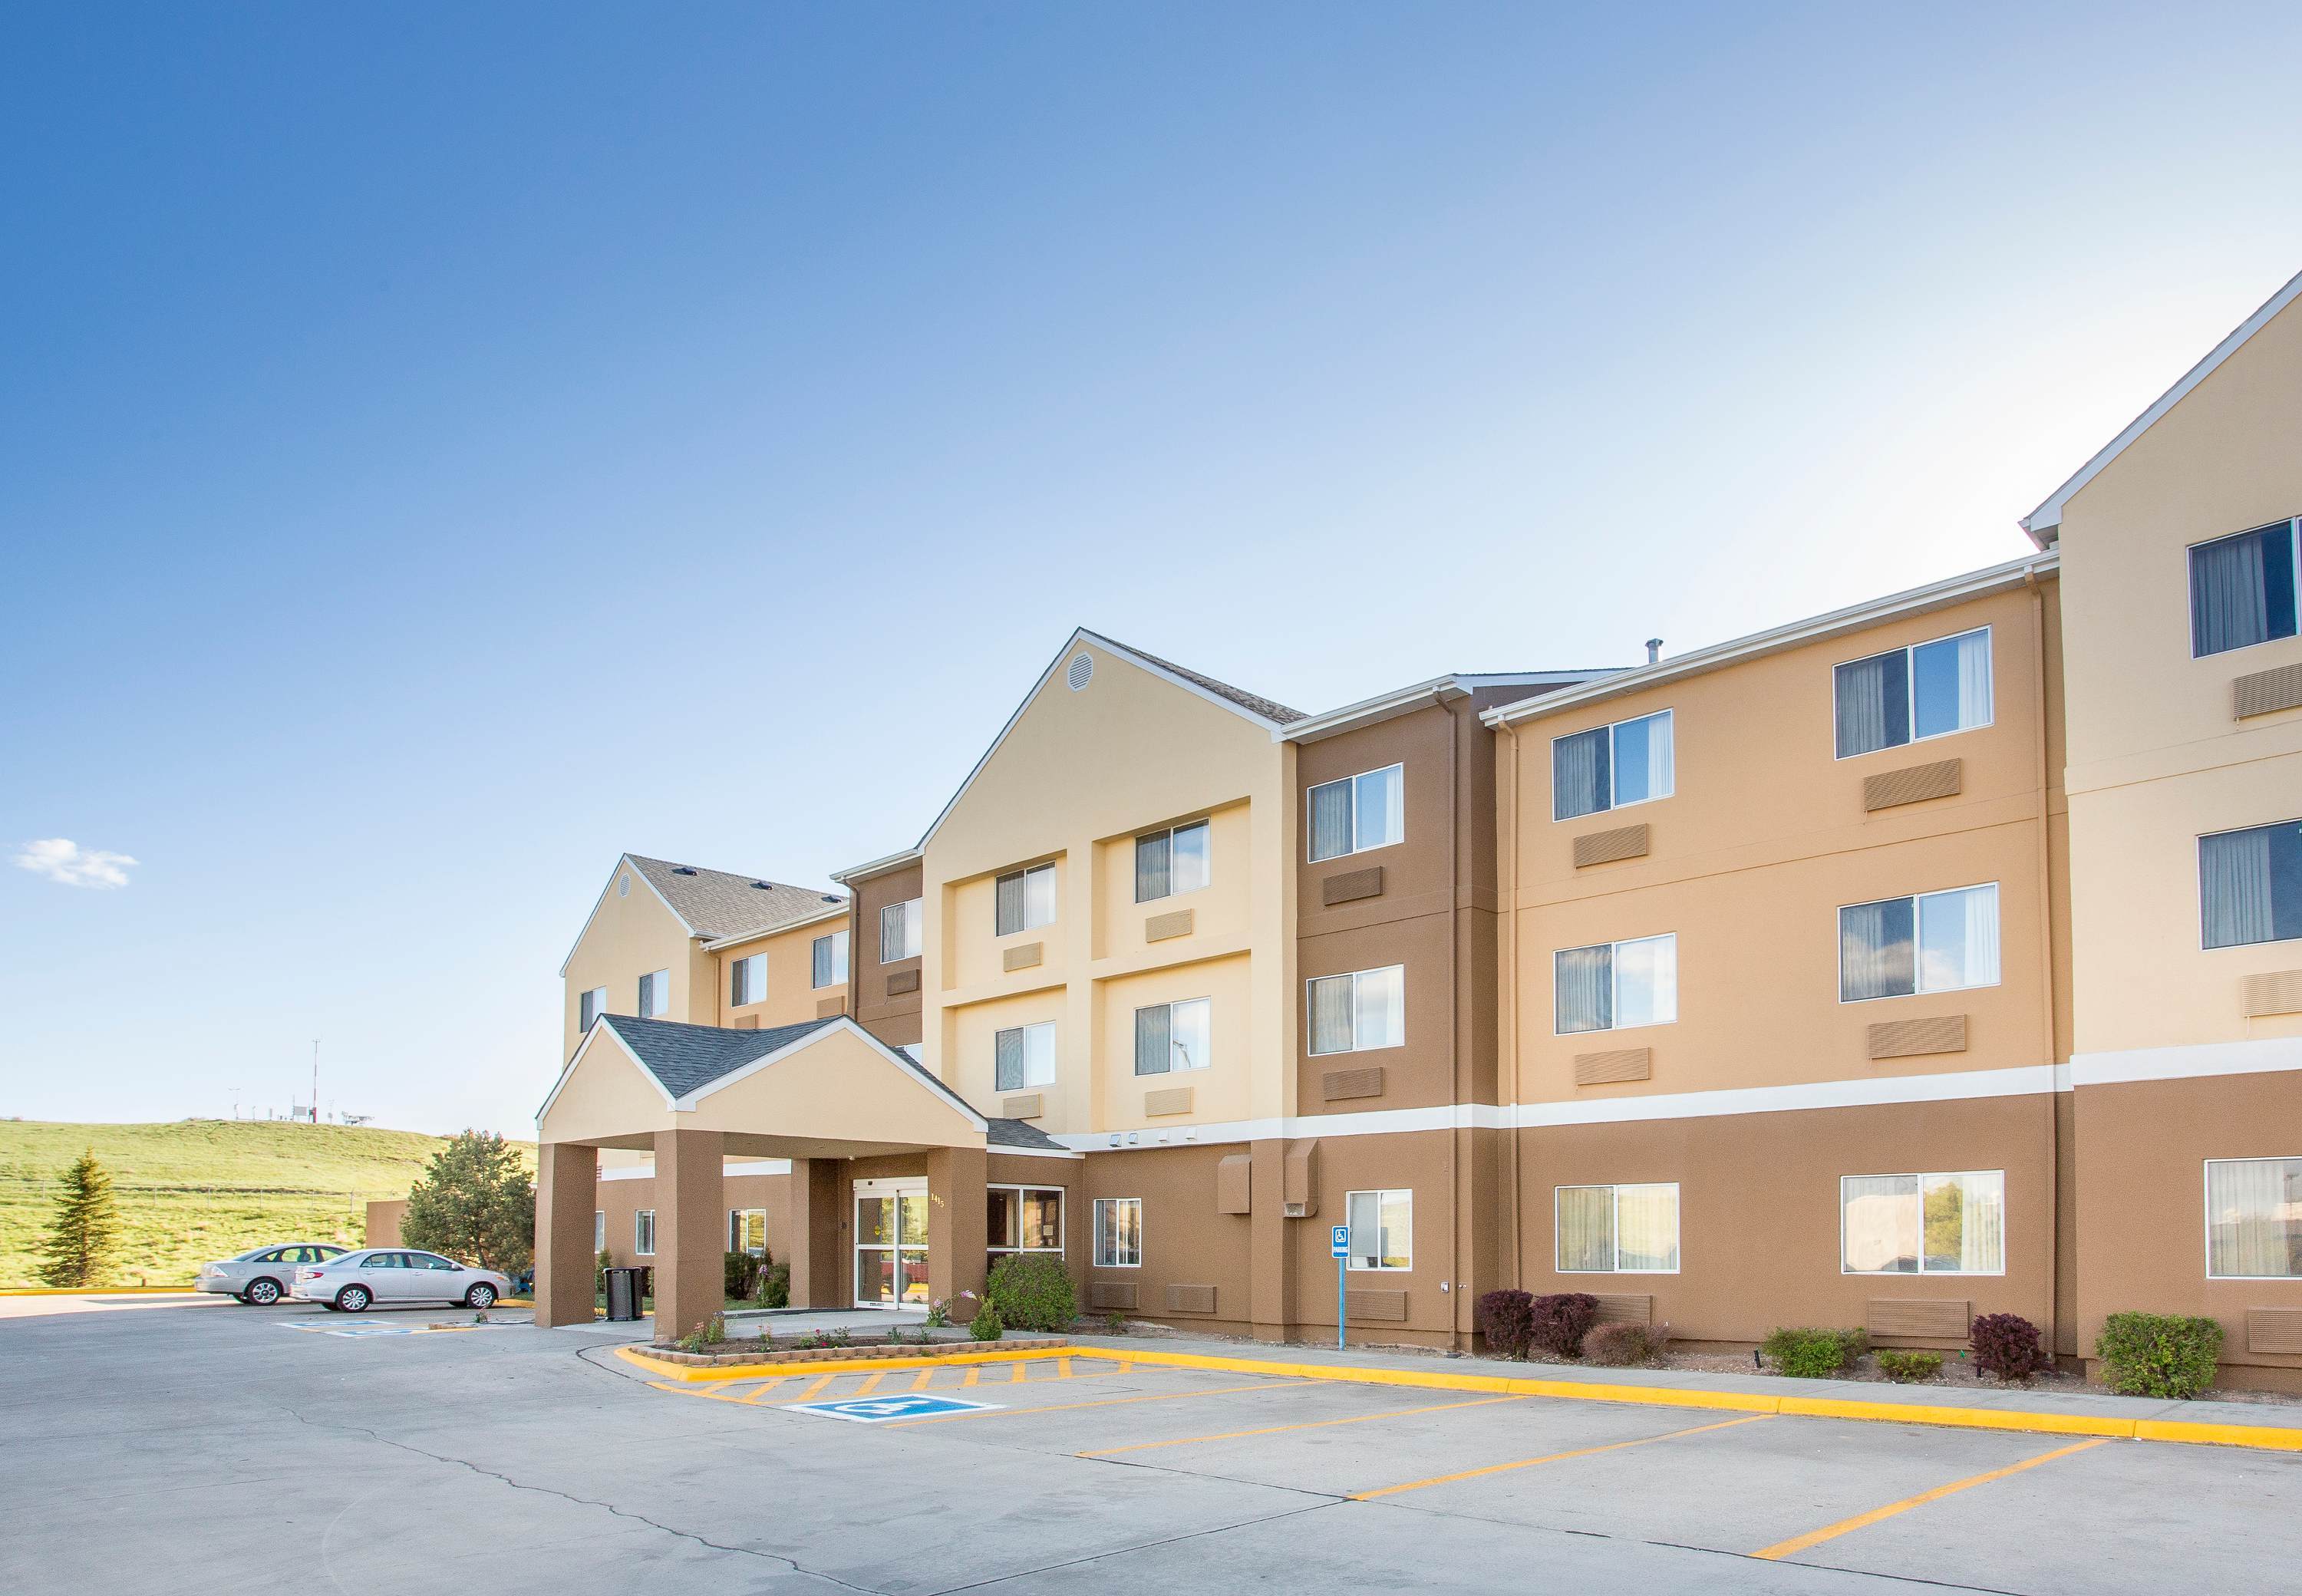 Photo of Fairfield Inn & Suites by Marriott Cheyenne, Cheyenne, WY